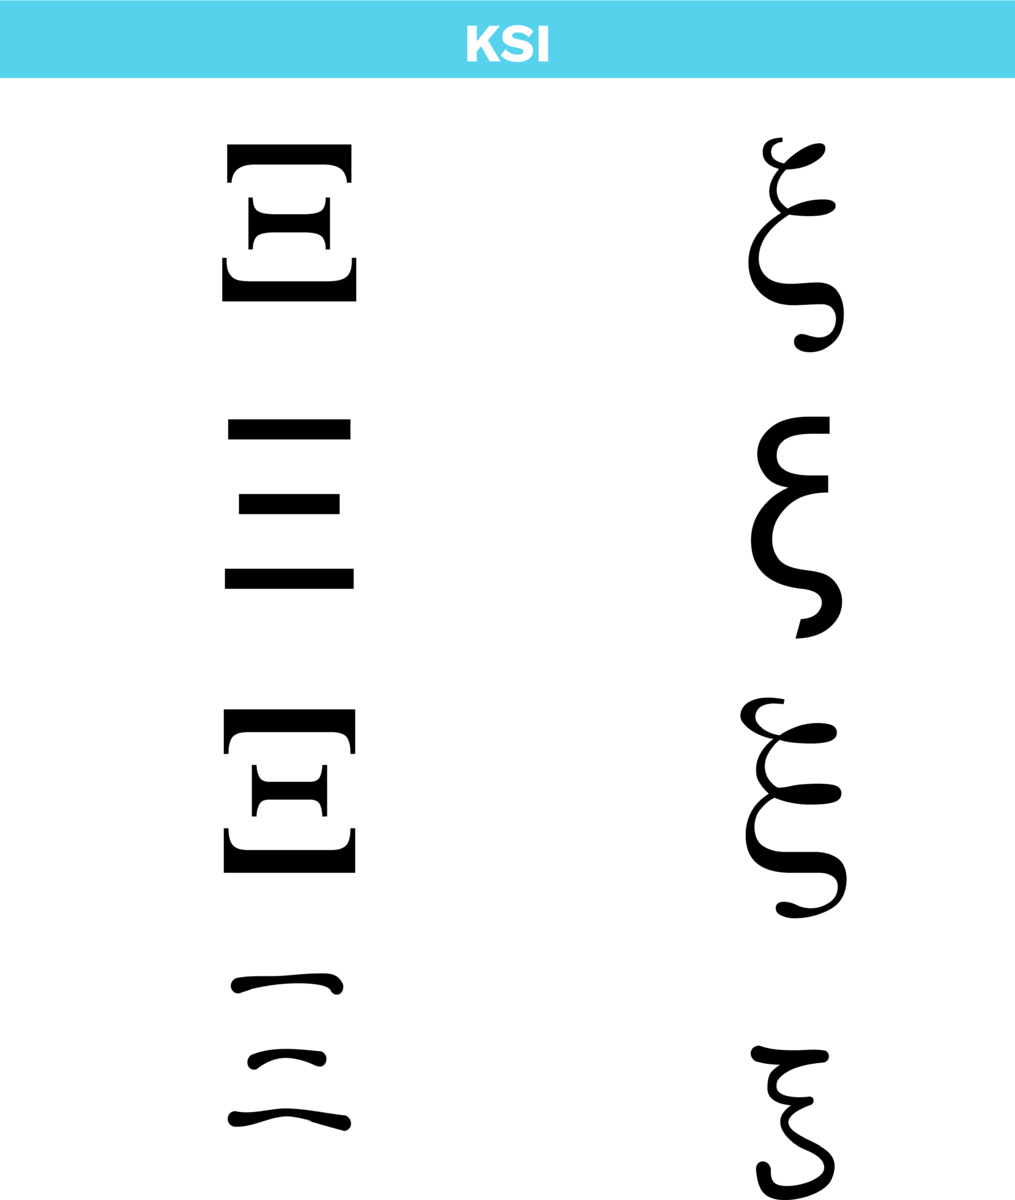 Bokstaven ksi i det greske alfabetet i ulike skrifttyper